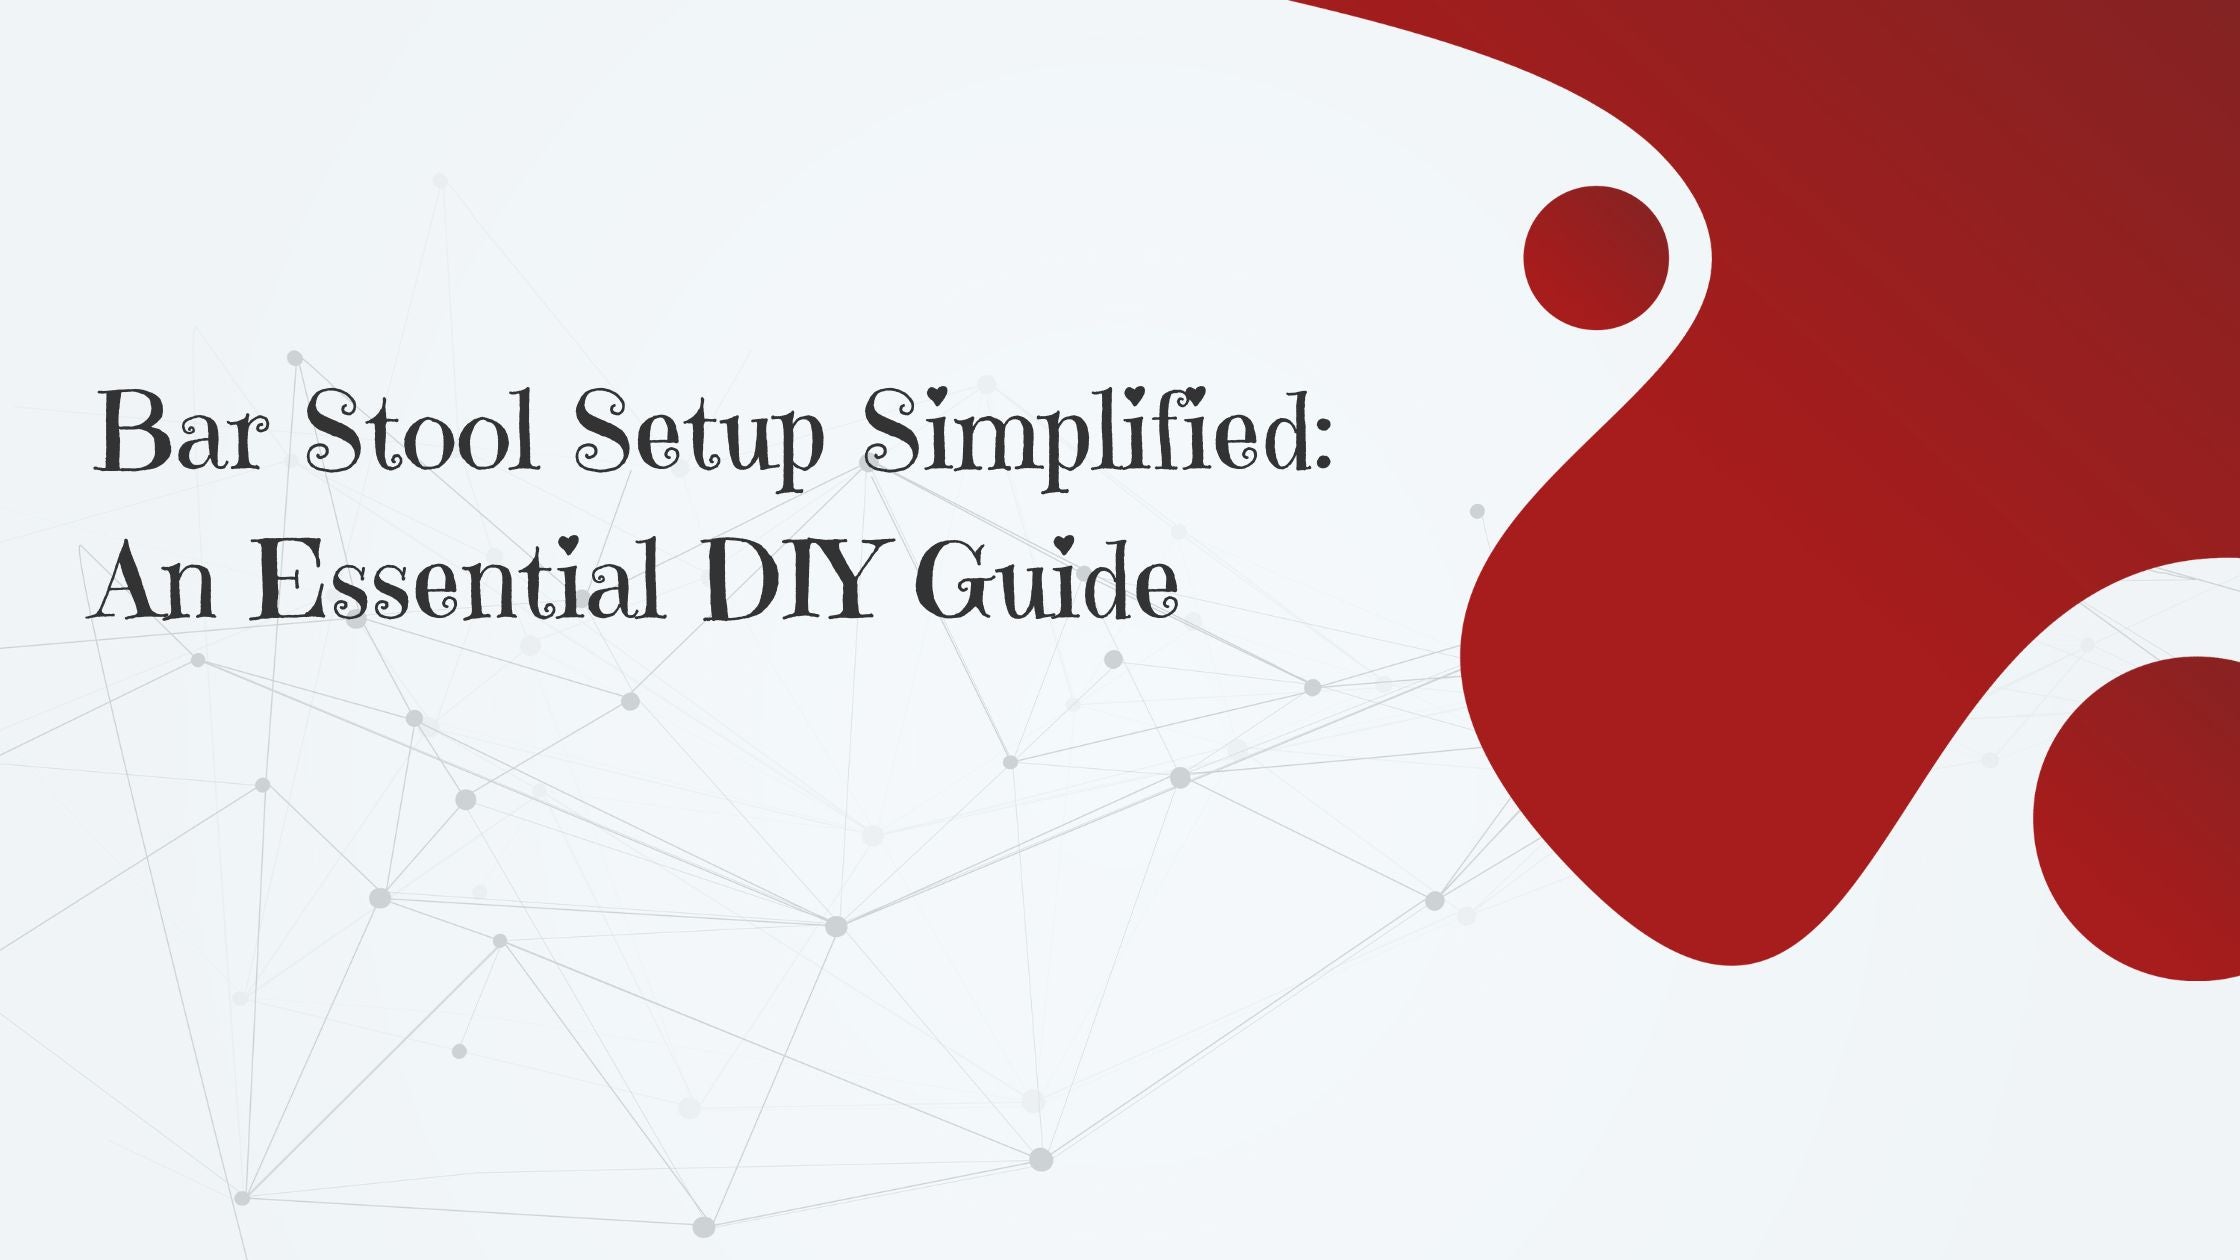 Bar Stool Setup Simplified: An Essential DIY Guide